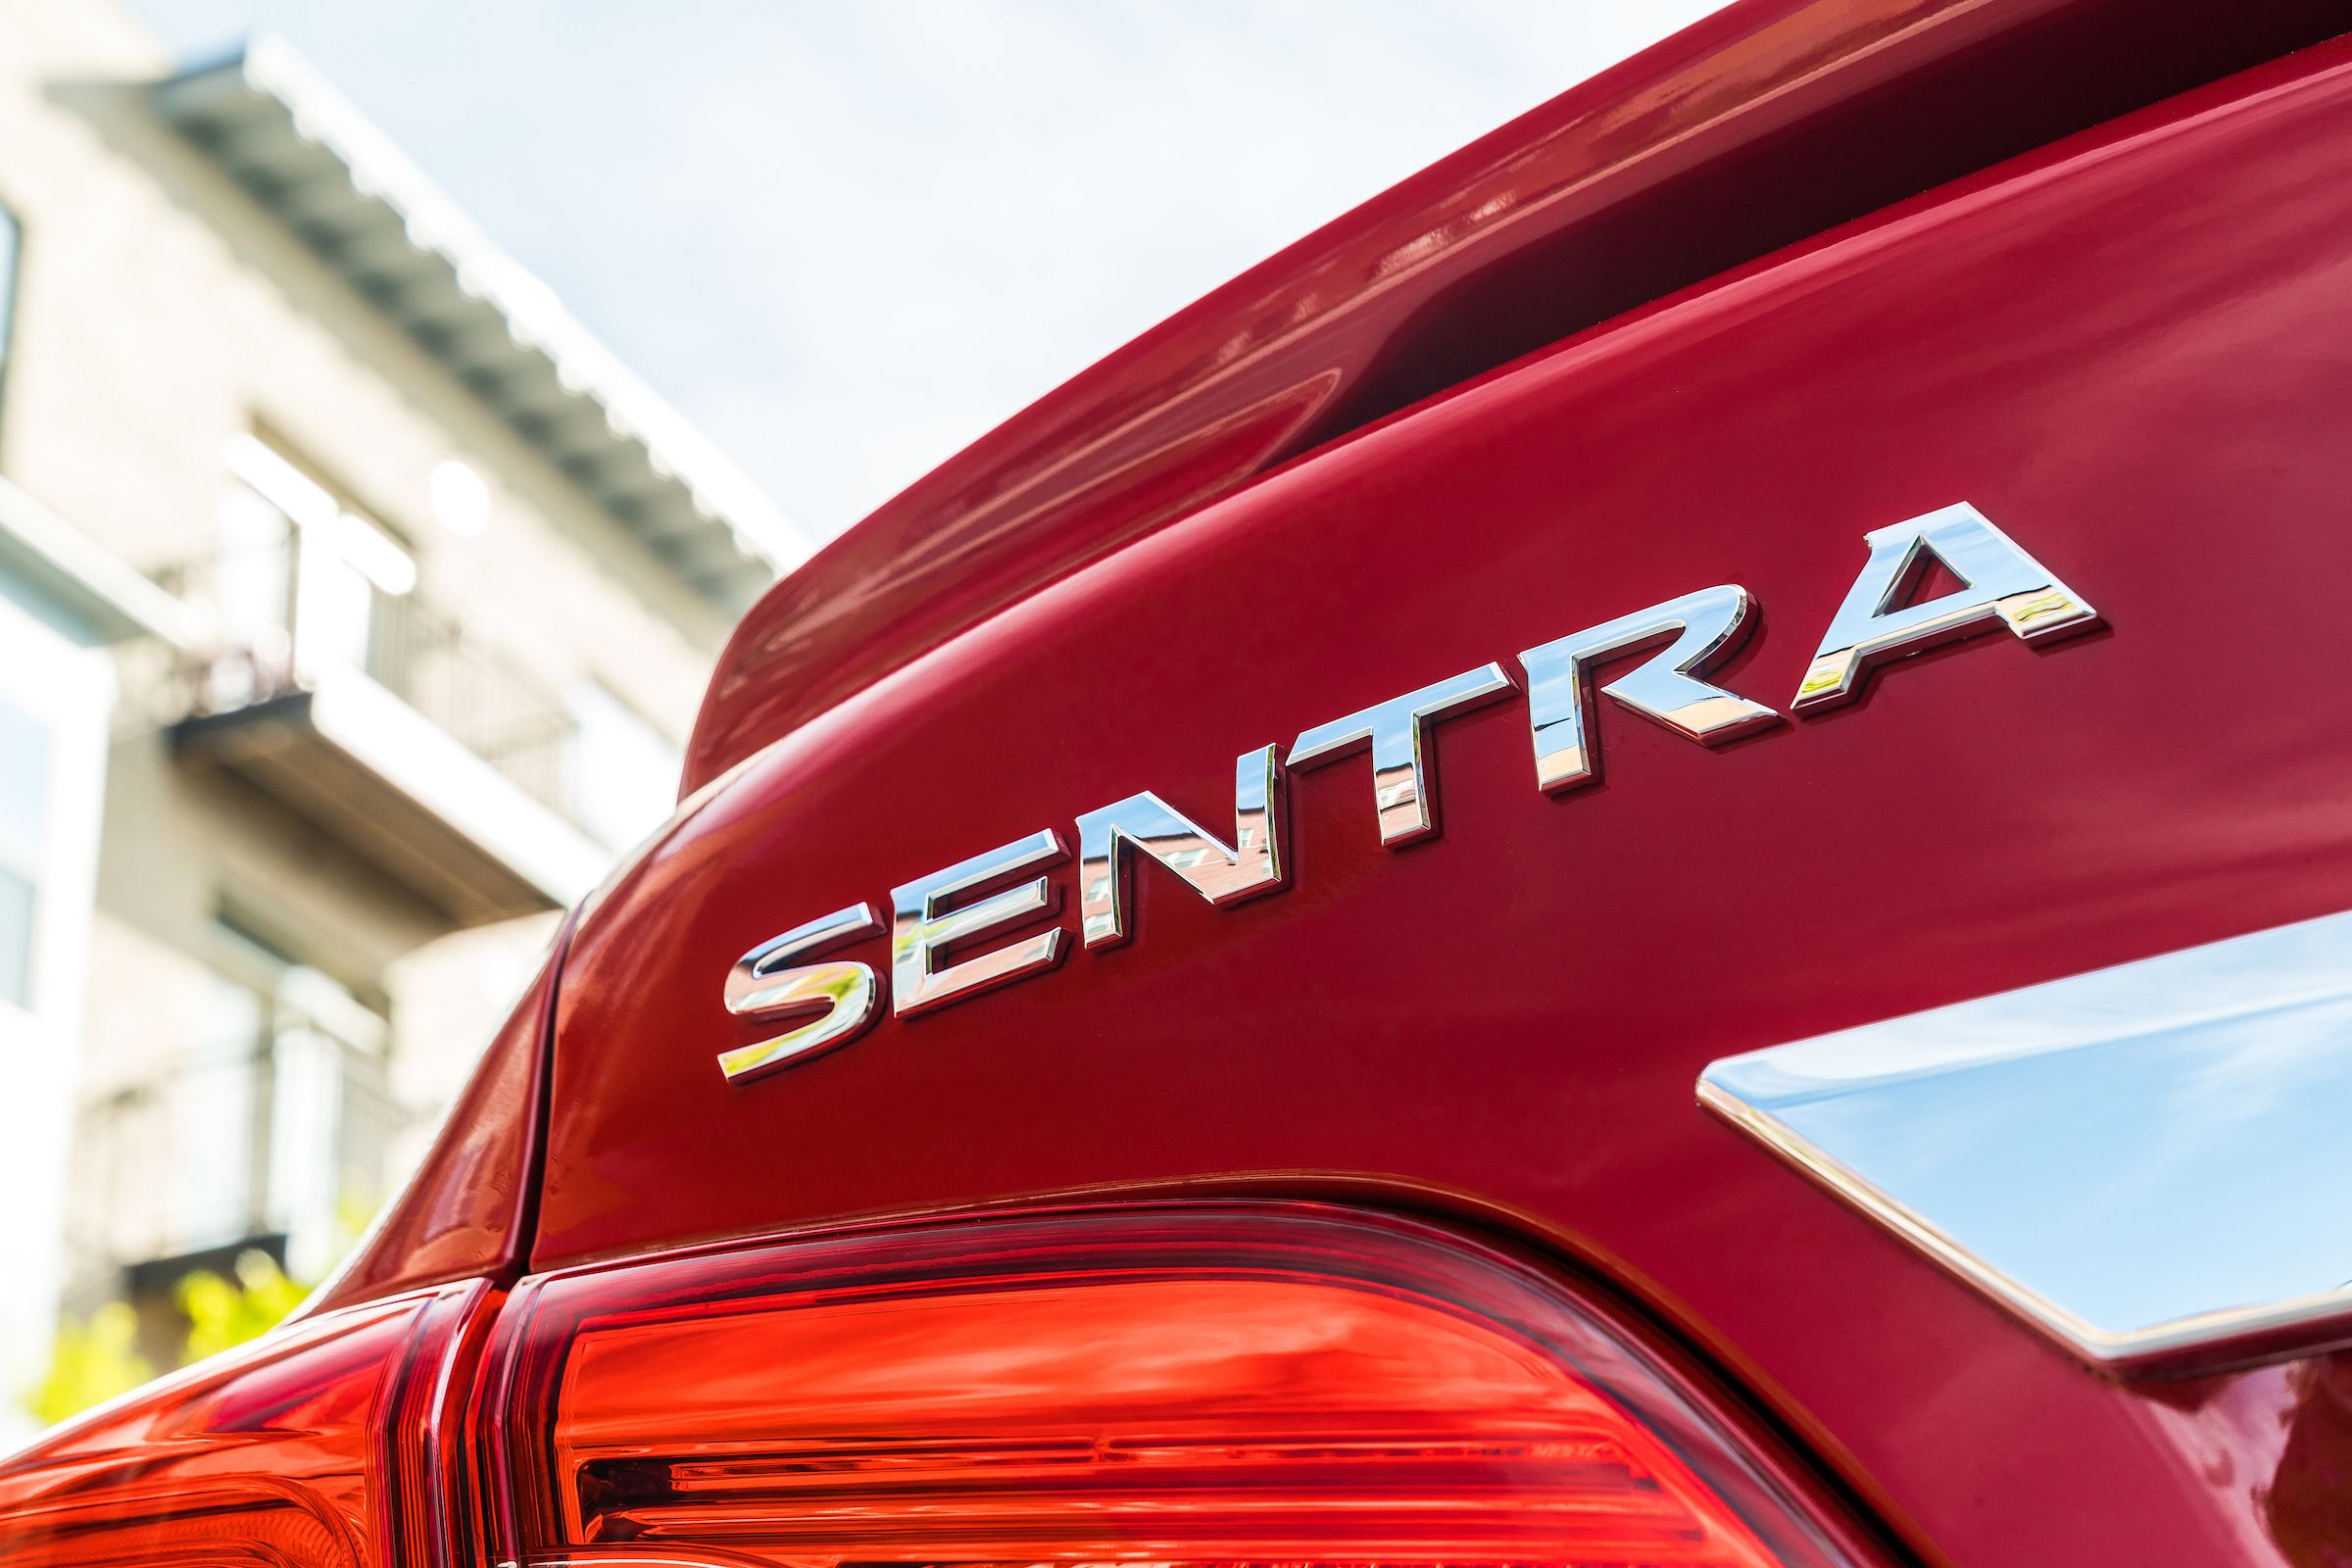 2019 Nissan Sentra - Short Review